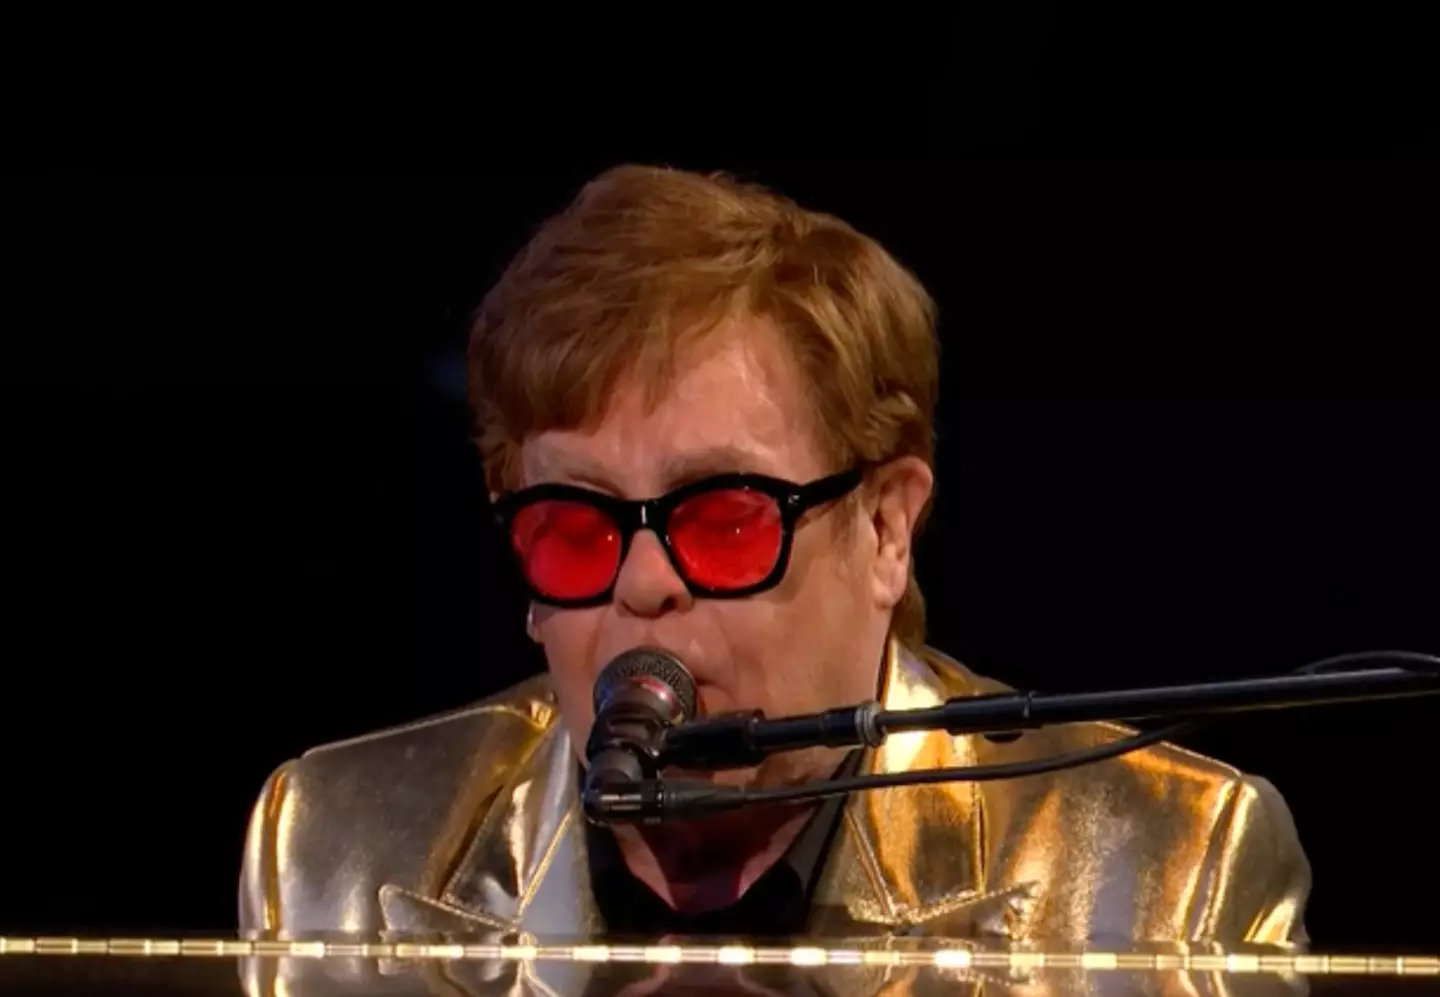 Elton John gave a mega performance for the crowd at Glastonbury.